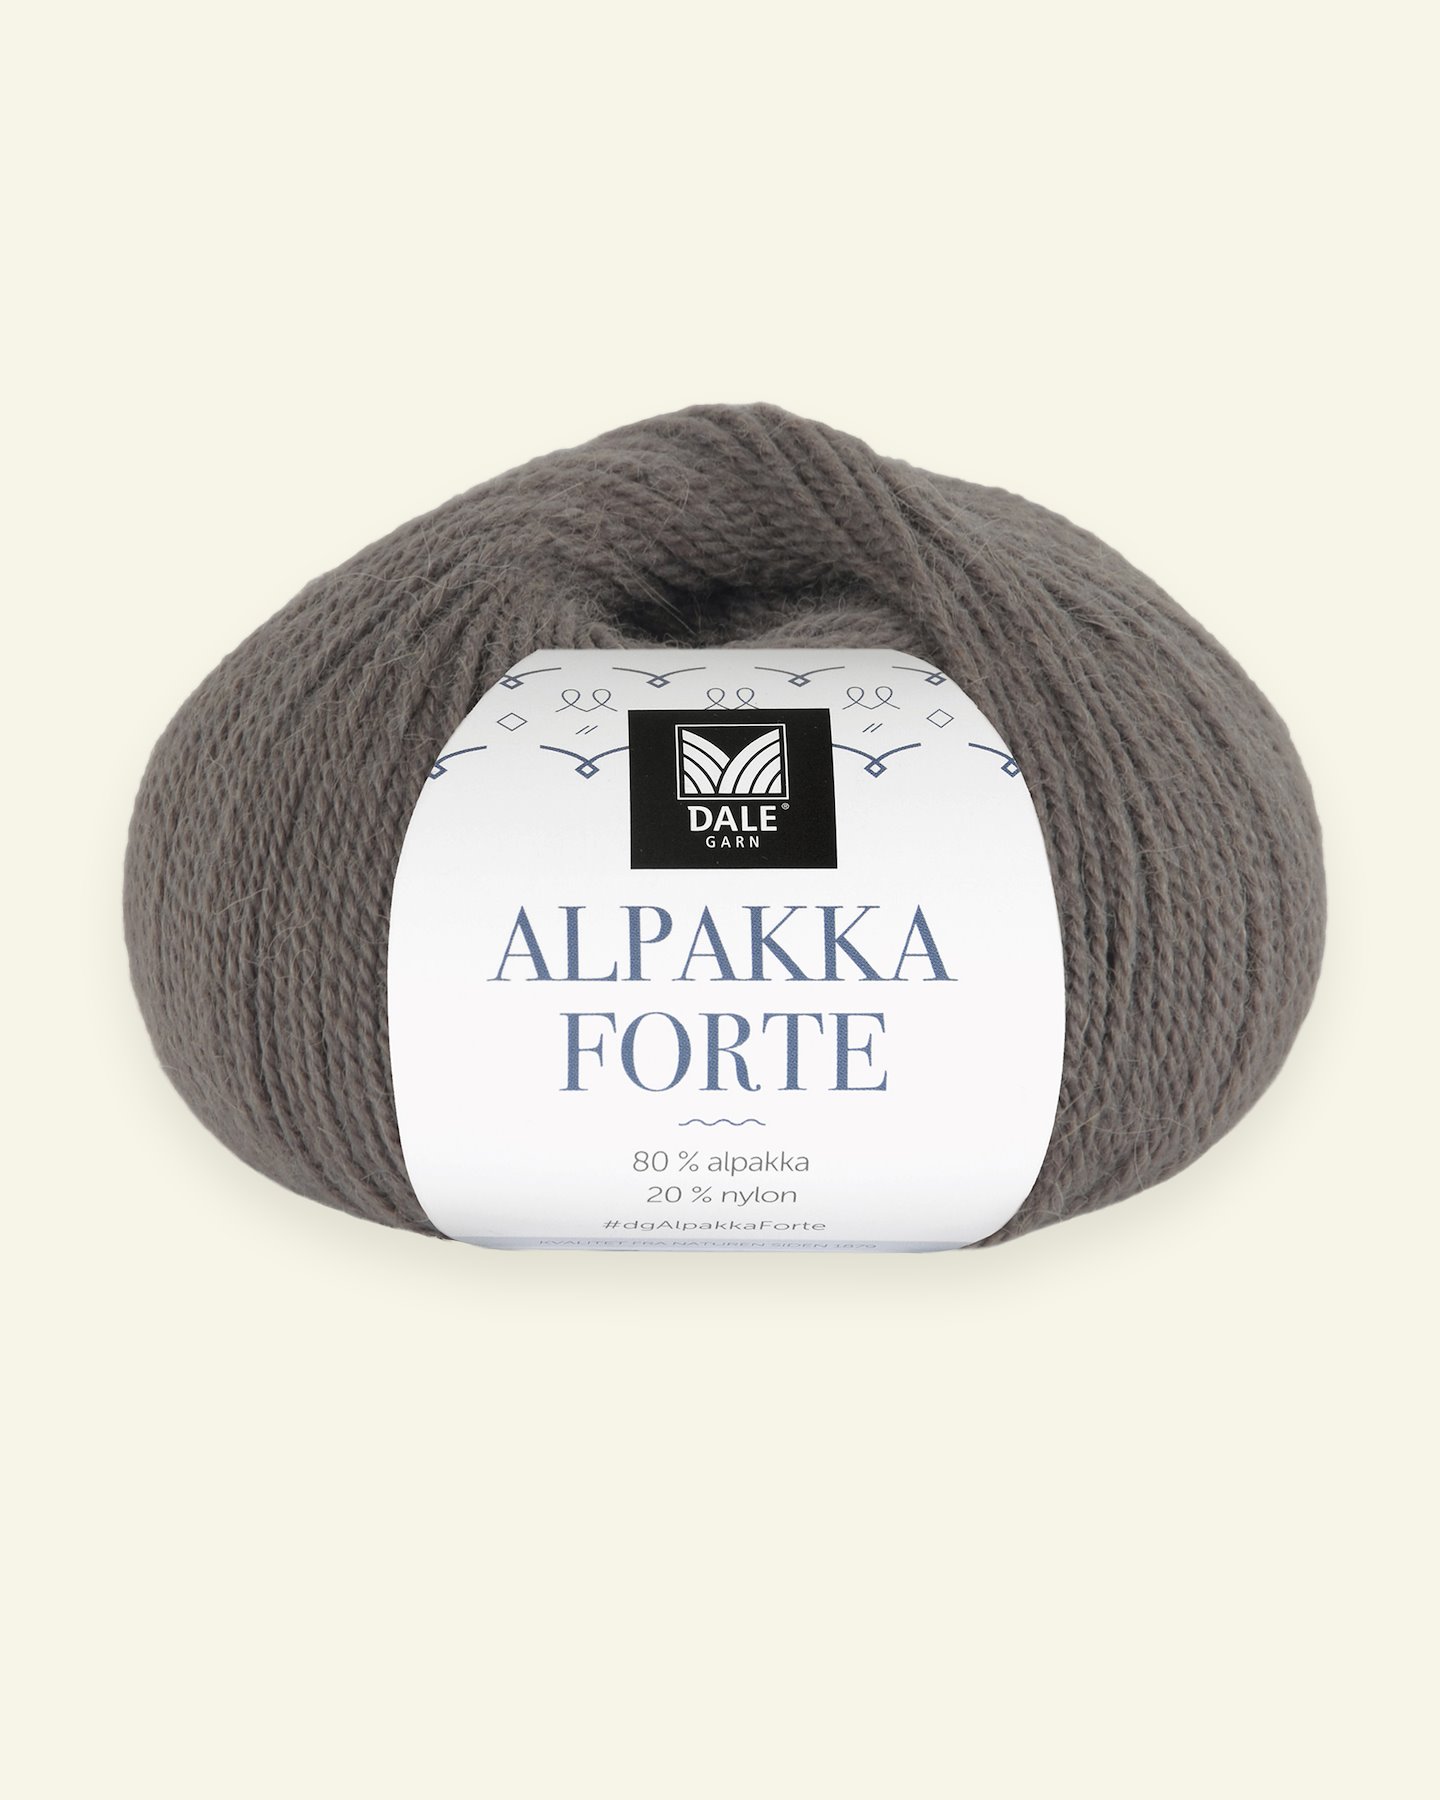 Dale Garn, alpackagarn "Alpakka Forte", mullvad (735) 90000459_pack